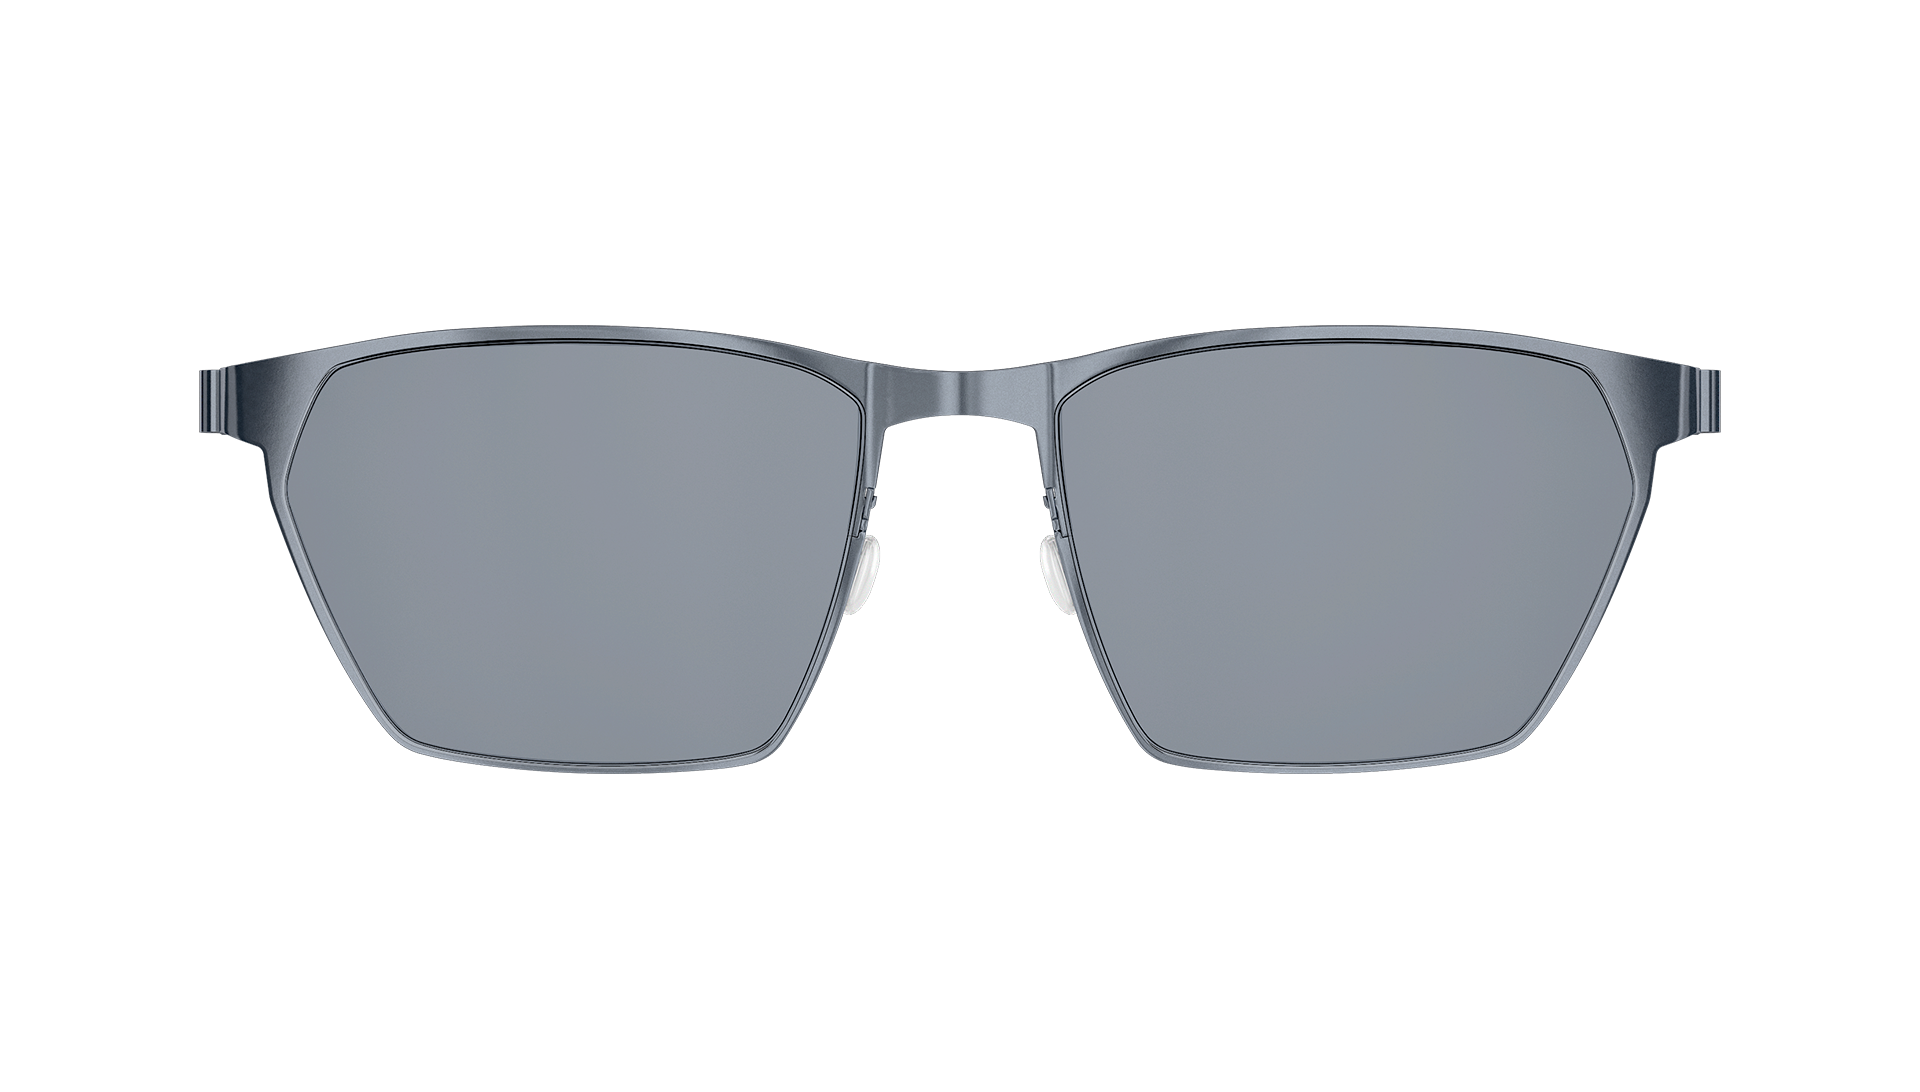 LINDBERG sun titanium Model 8906 angular square shape sunglasses in PU16 grey colour